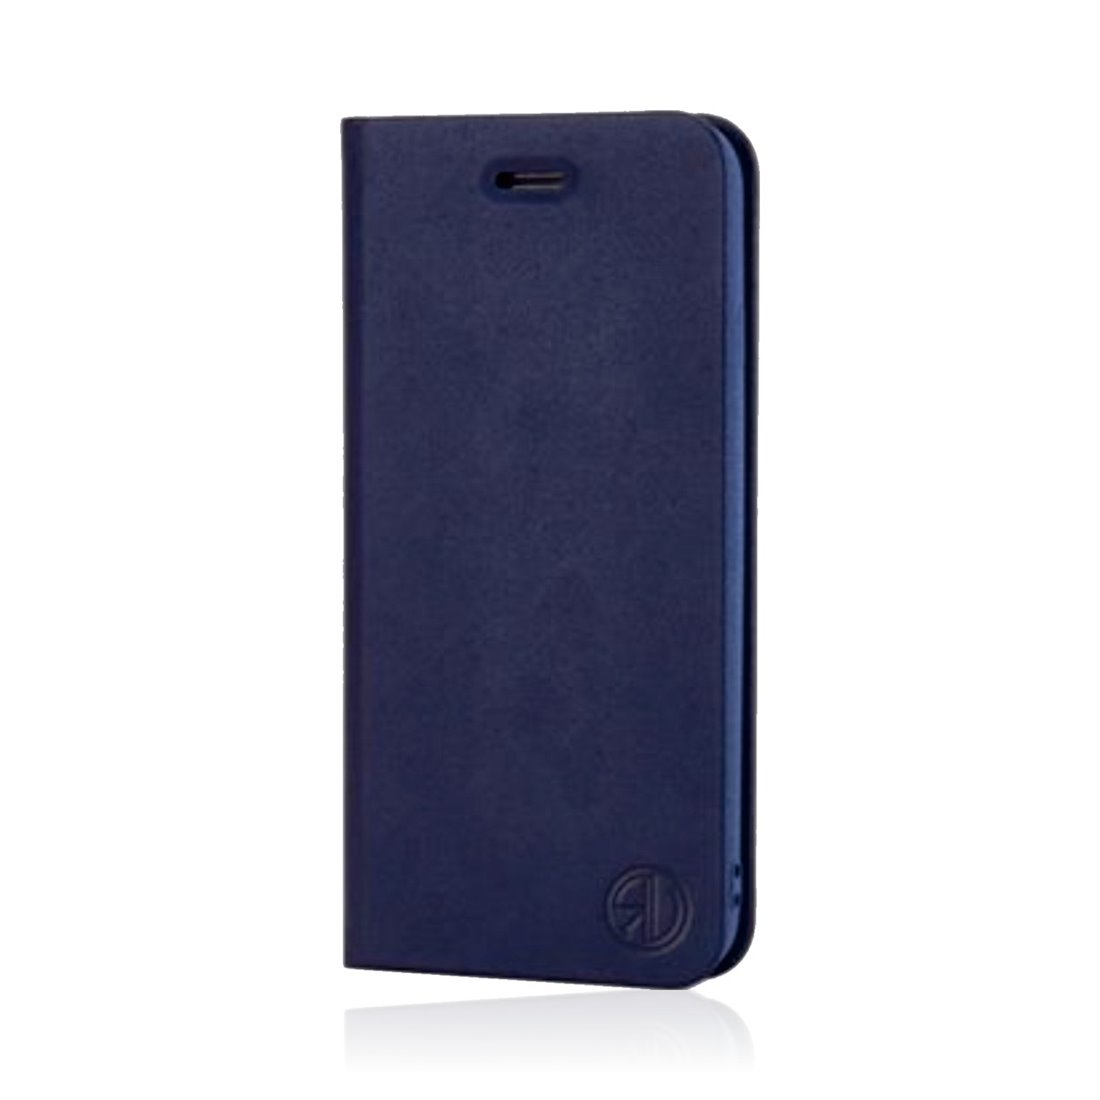 Galaxy S7 Edge Dark blue Case Smartphone Case